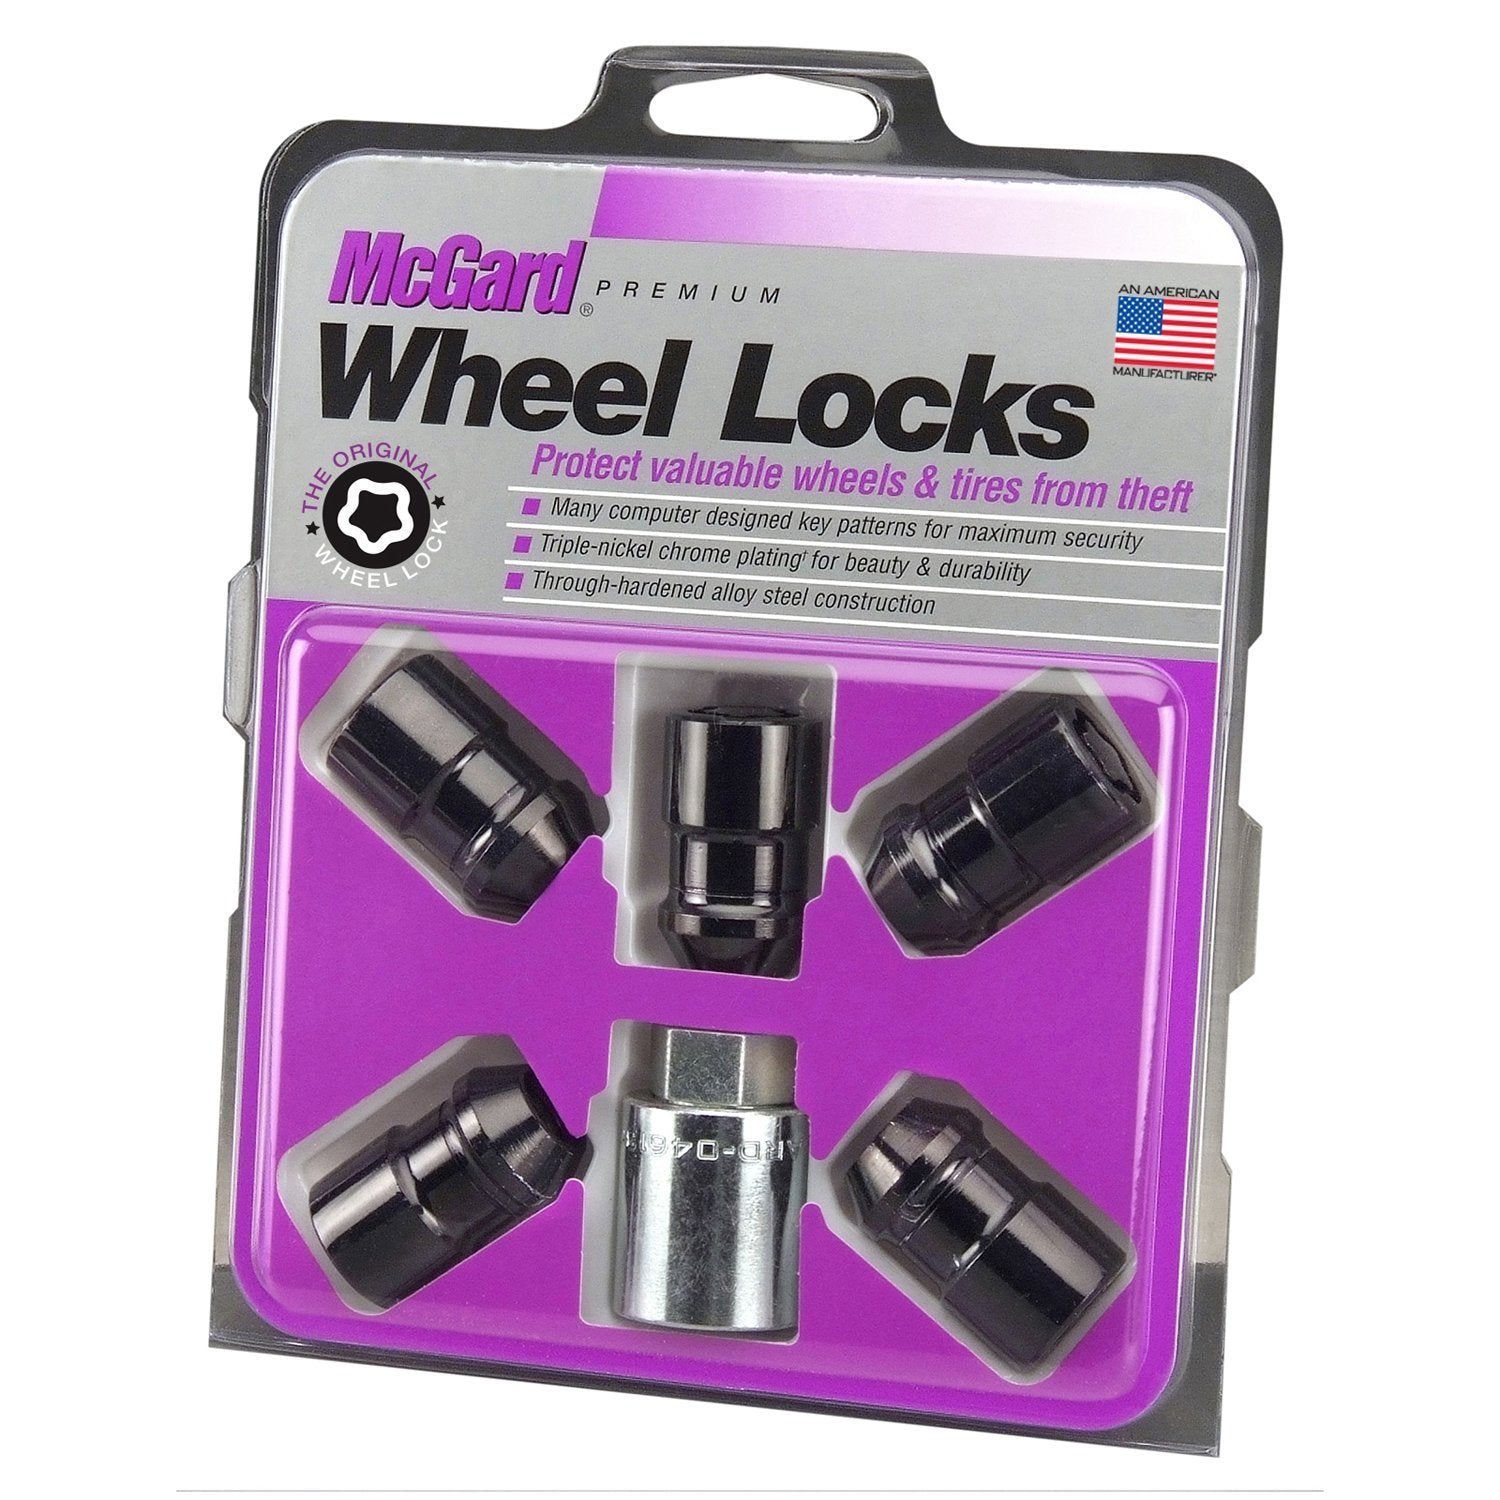 McGard, McGard Cone Seat Exposed Style Wheel Locks / Black / 5 Lock set (24526)